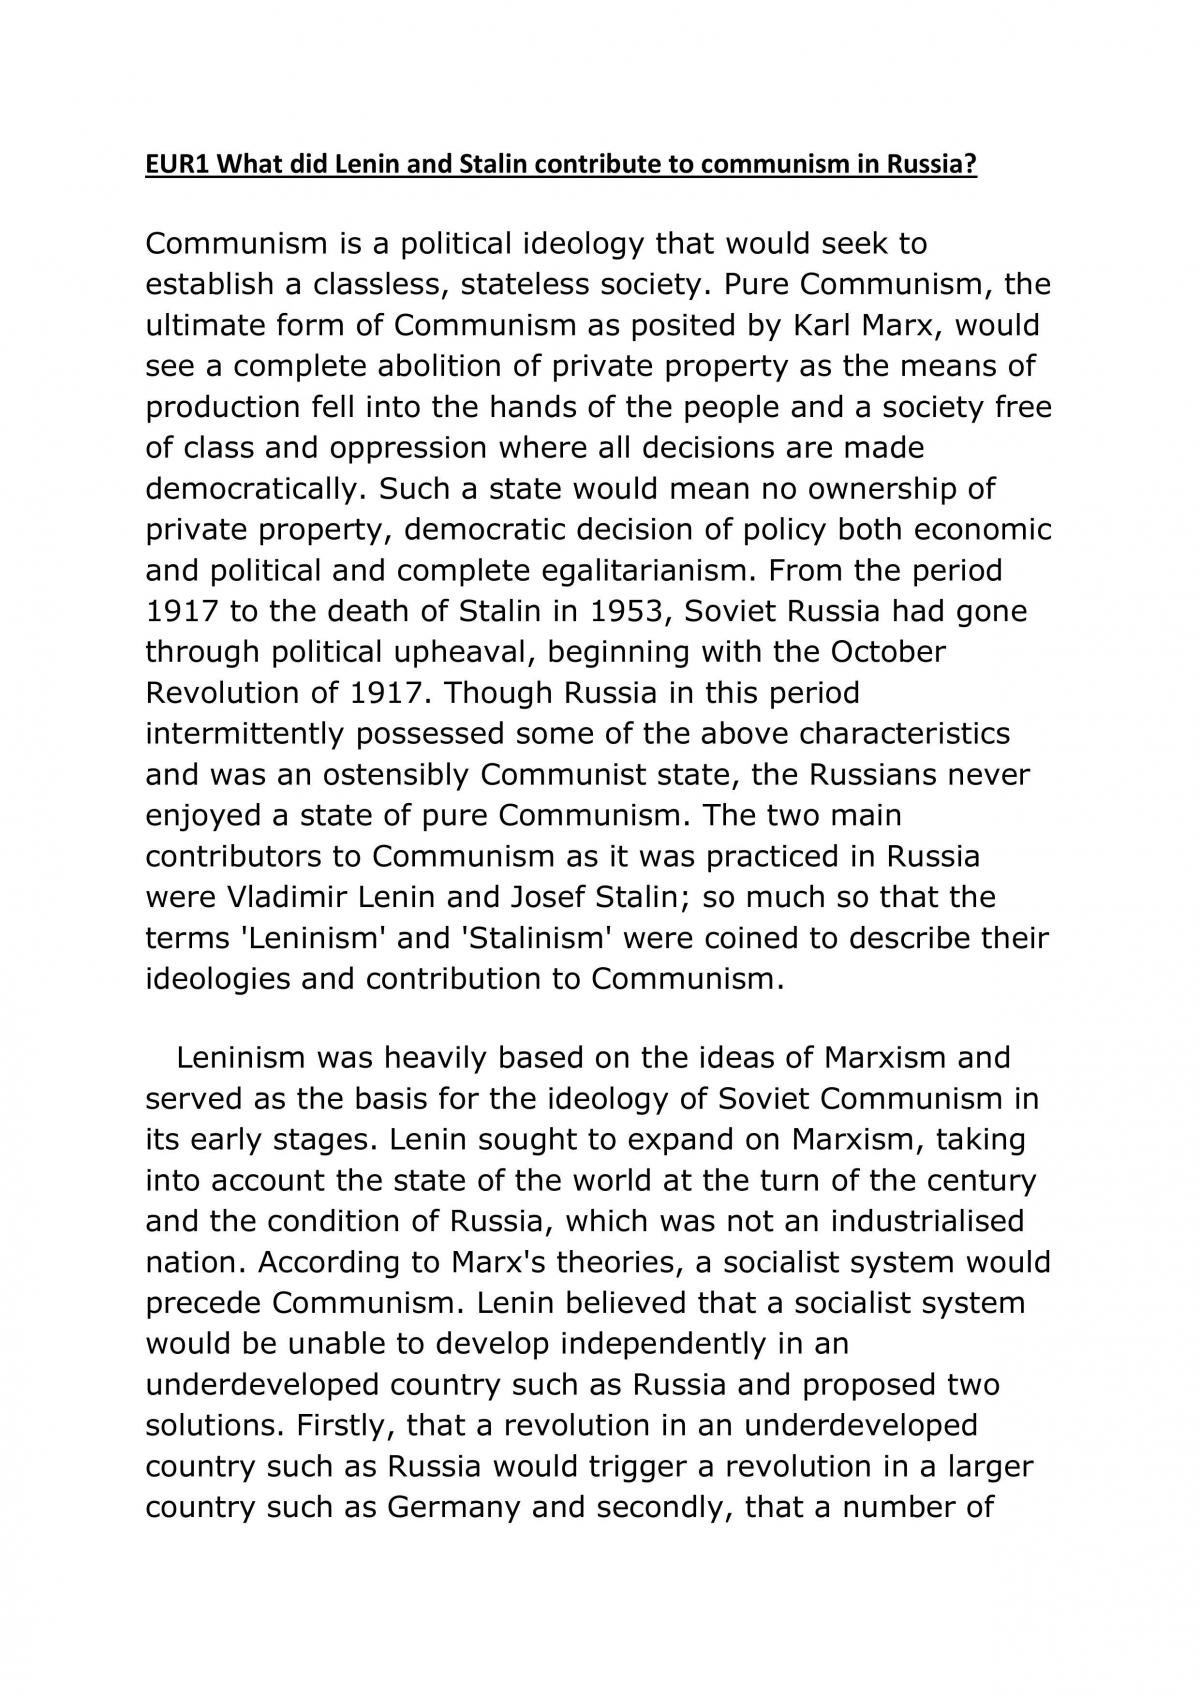 communism in russia 1900 to 1940 essay pdf